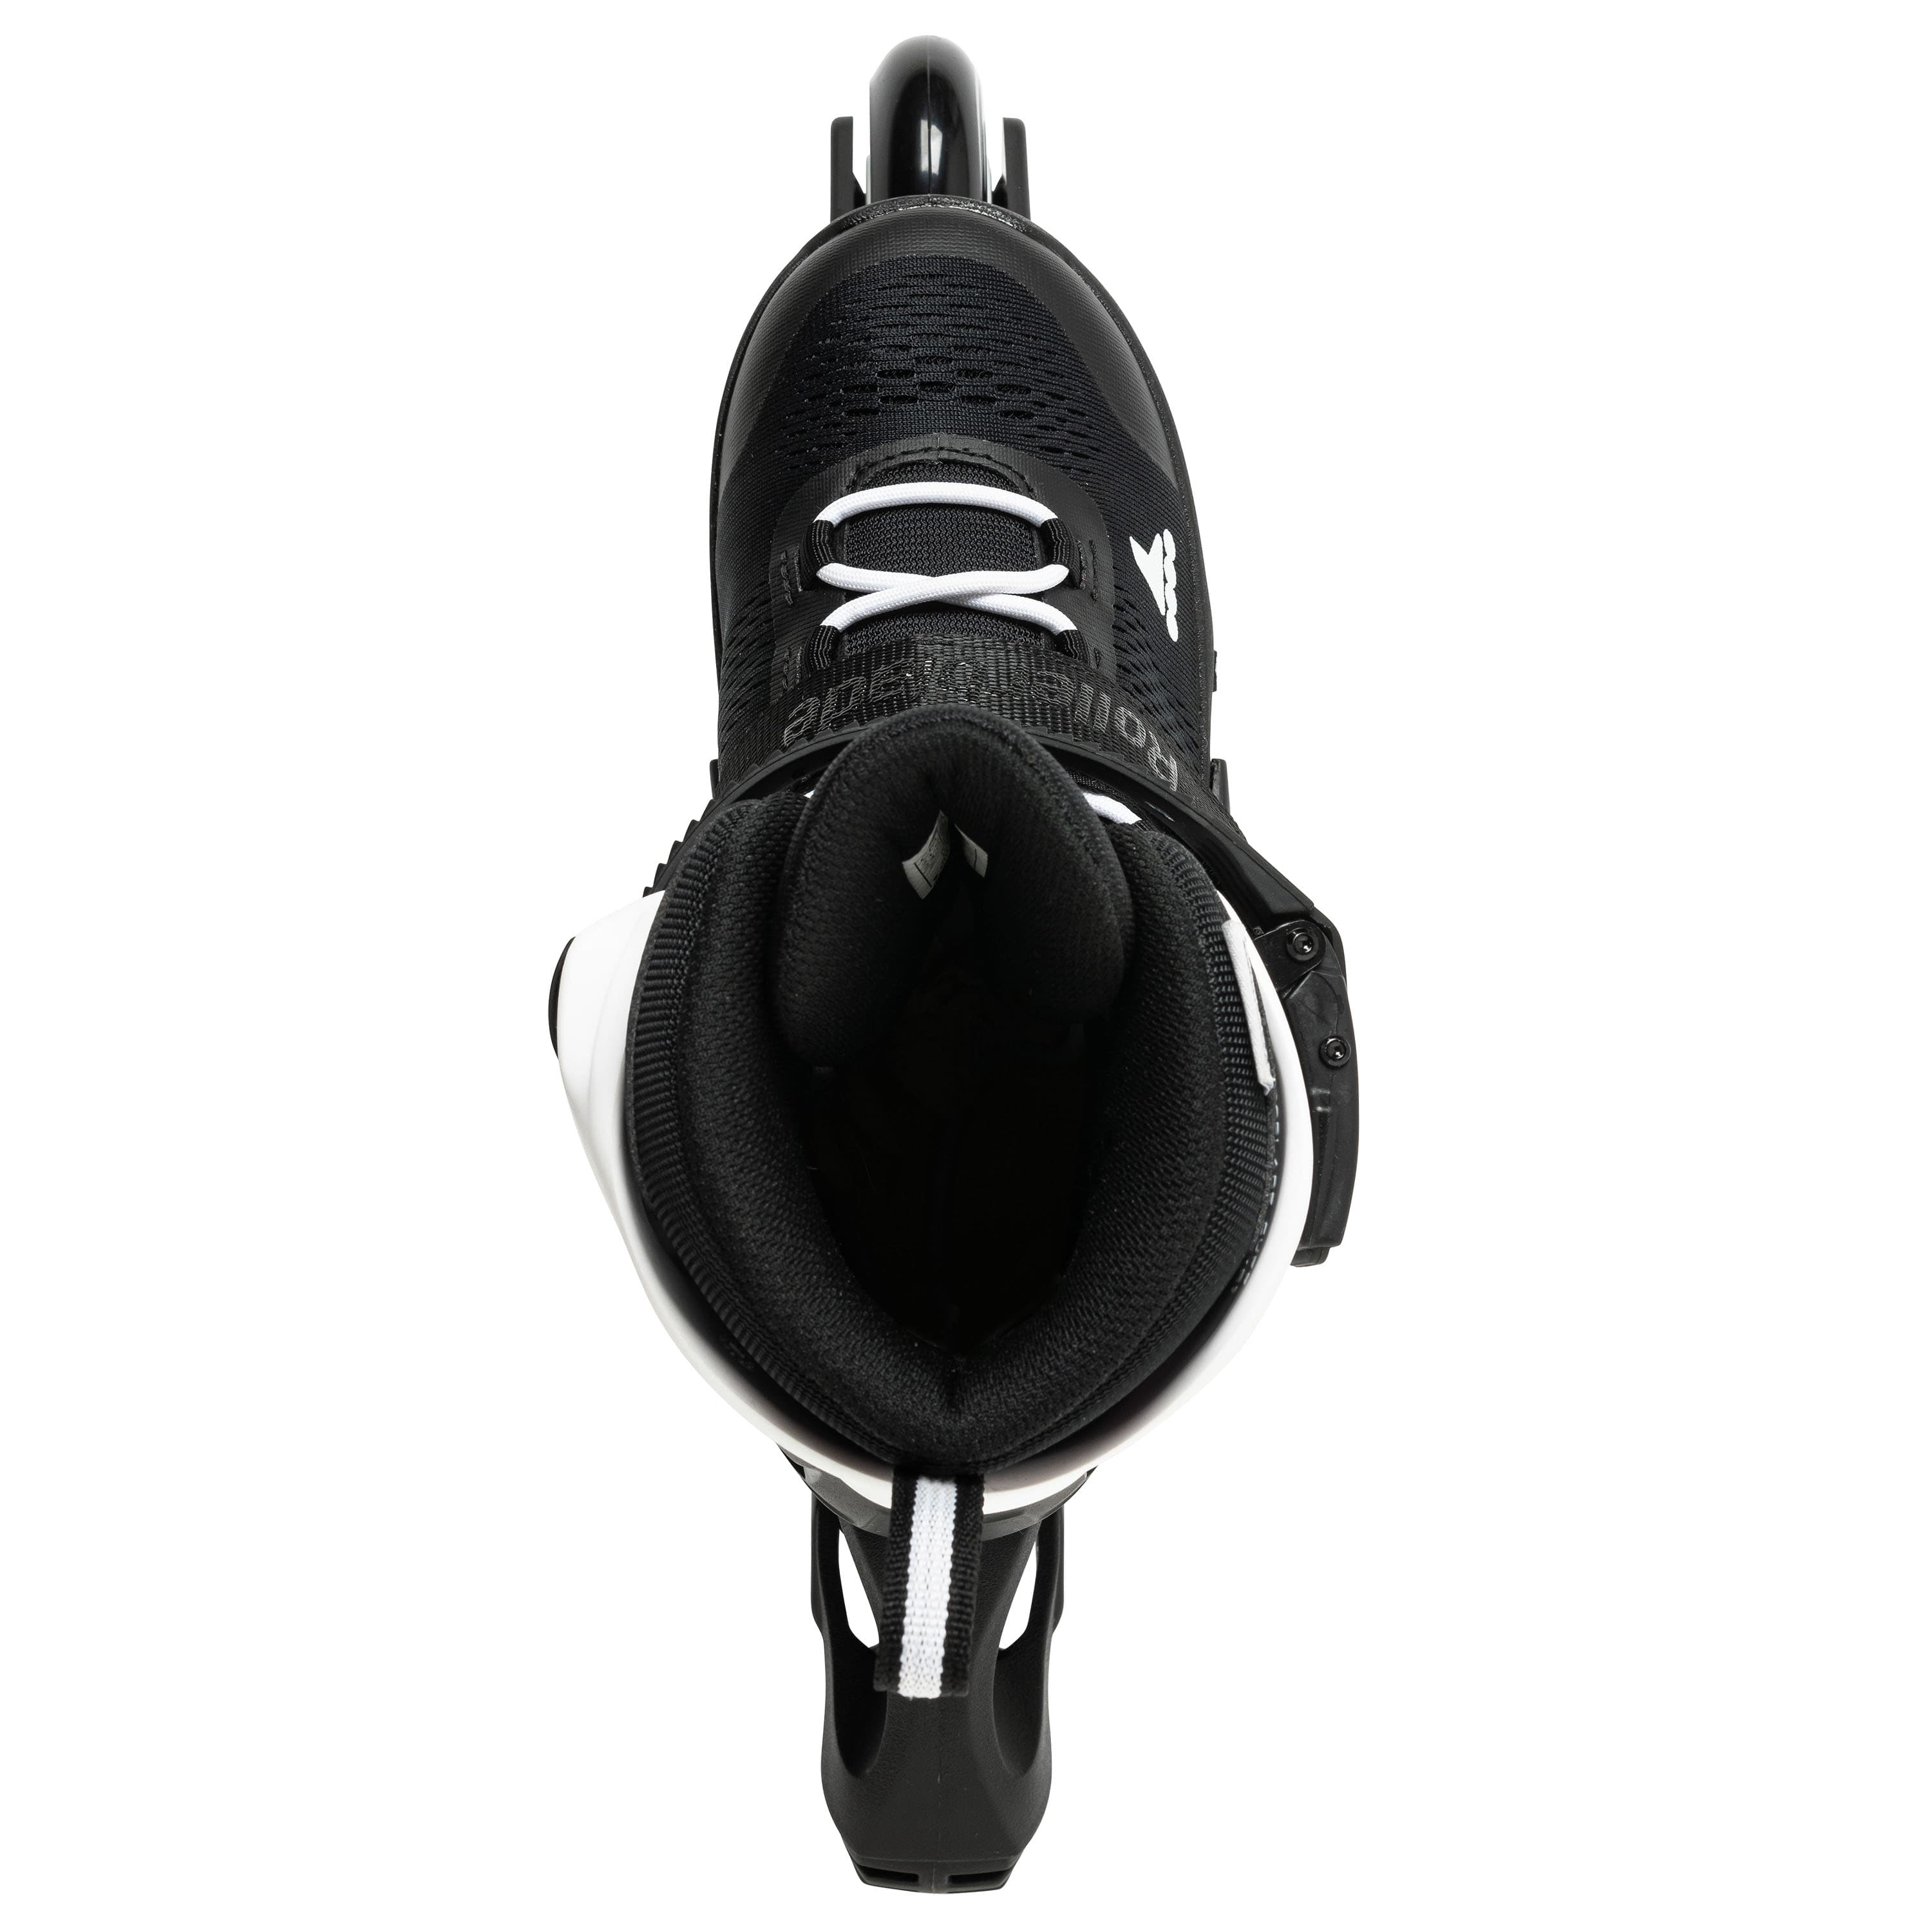 Rollerblade Microblade kinder inline skates 72 mm black / white